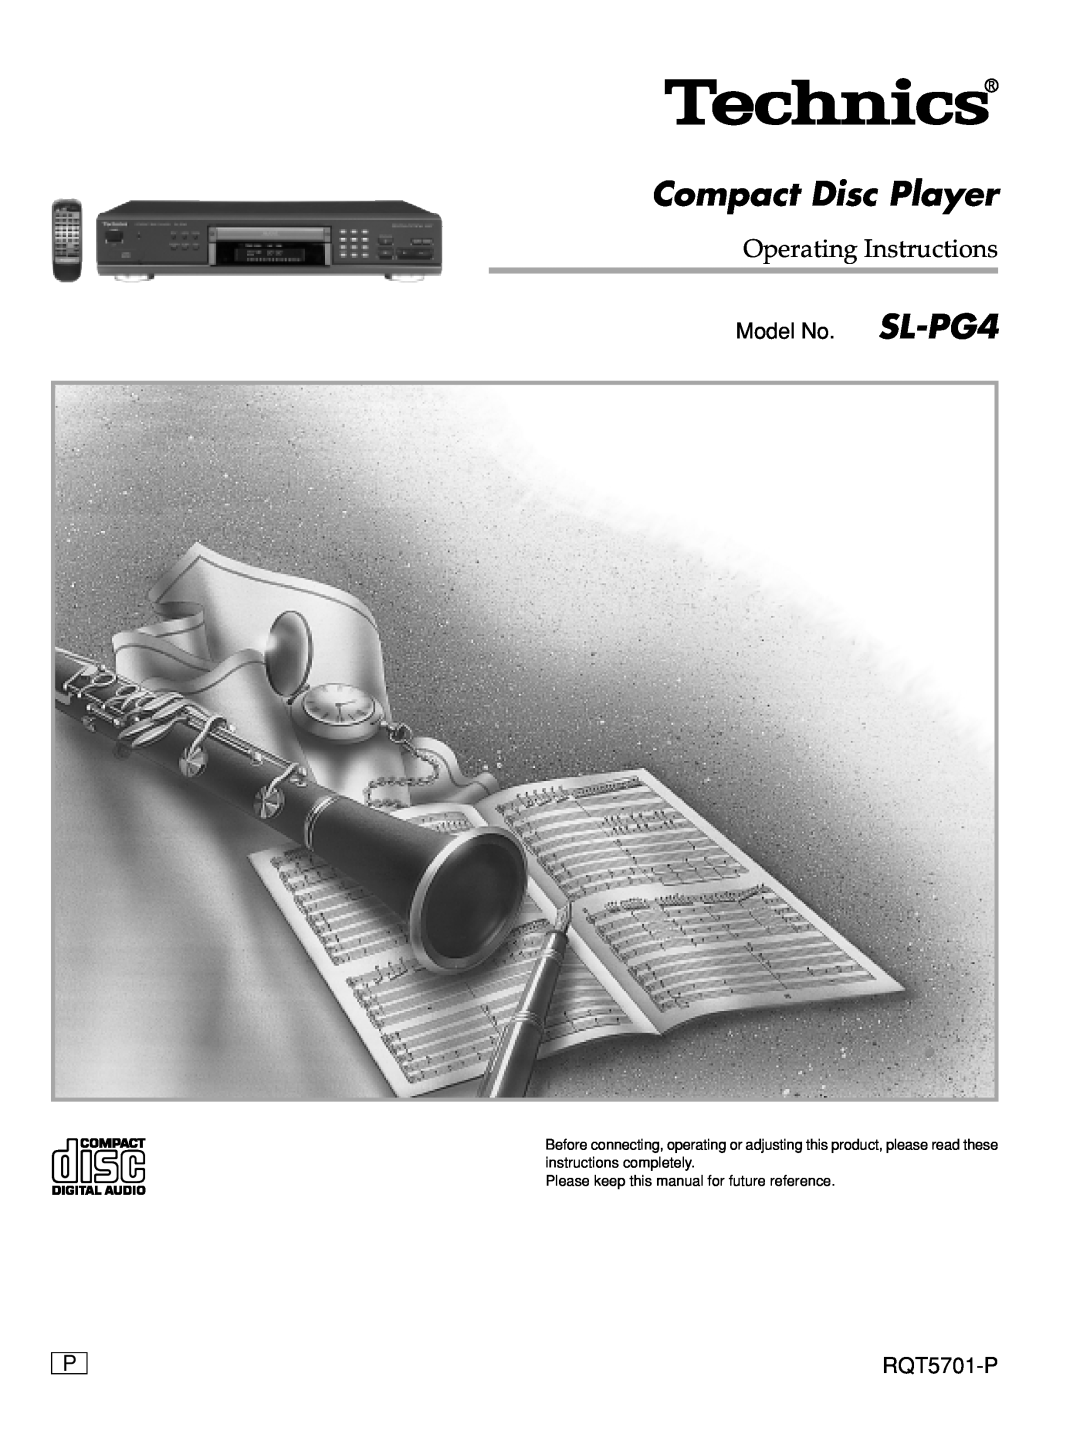 Panasonic manual Model No. SL-PG4, RQT5701-P, Compact Disc Player, Operating Instructions 